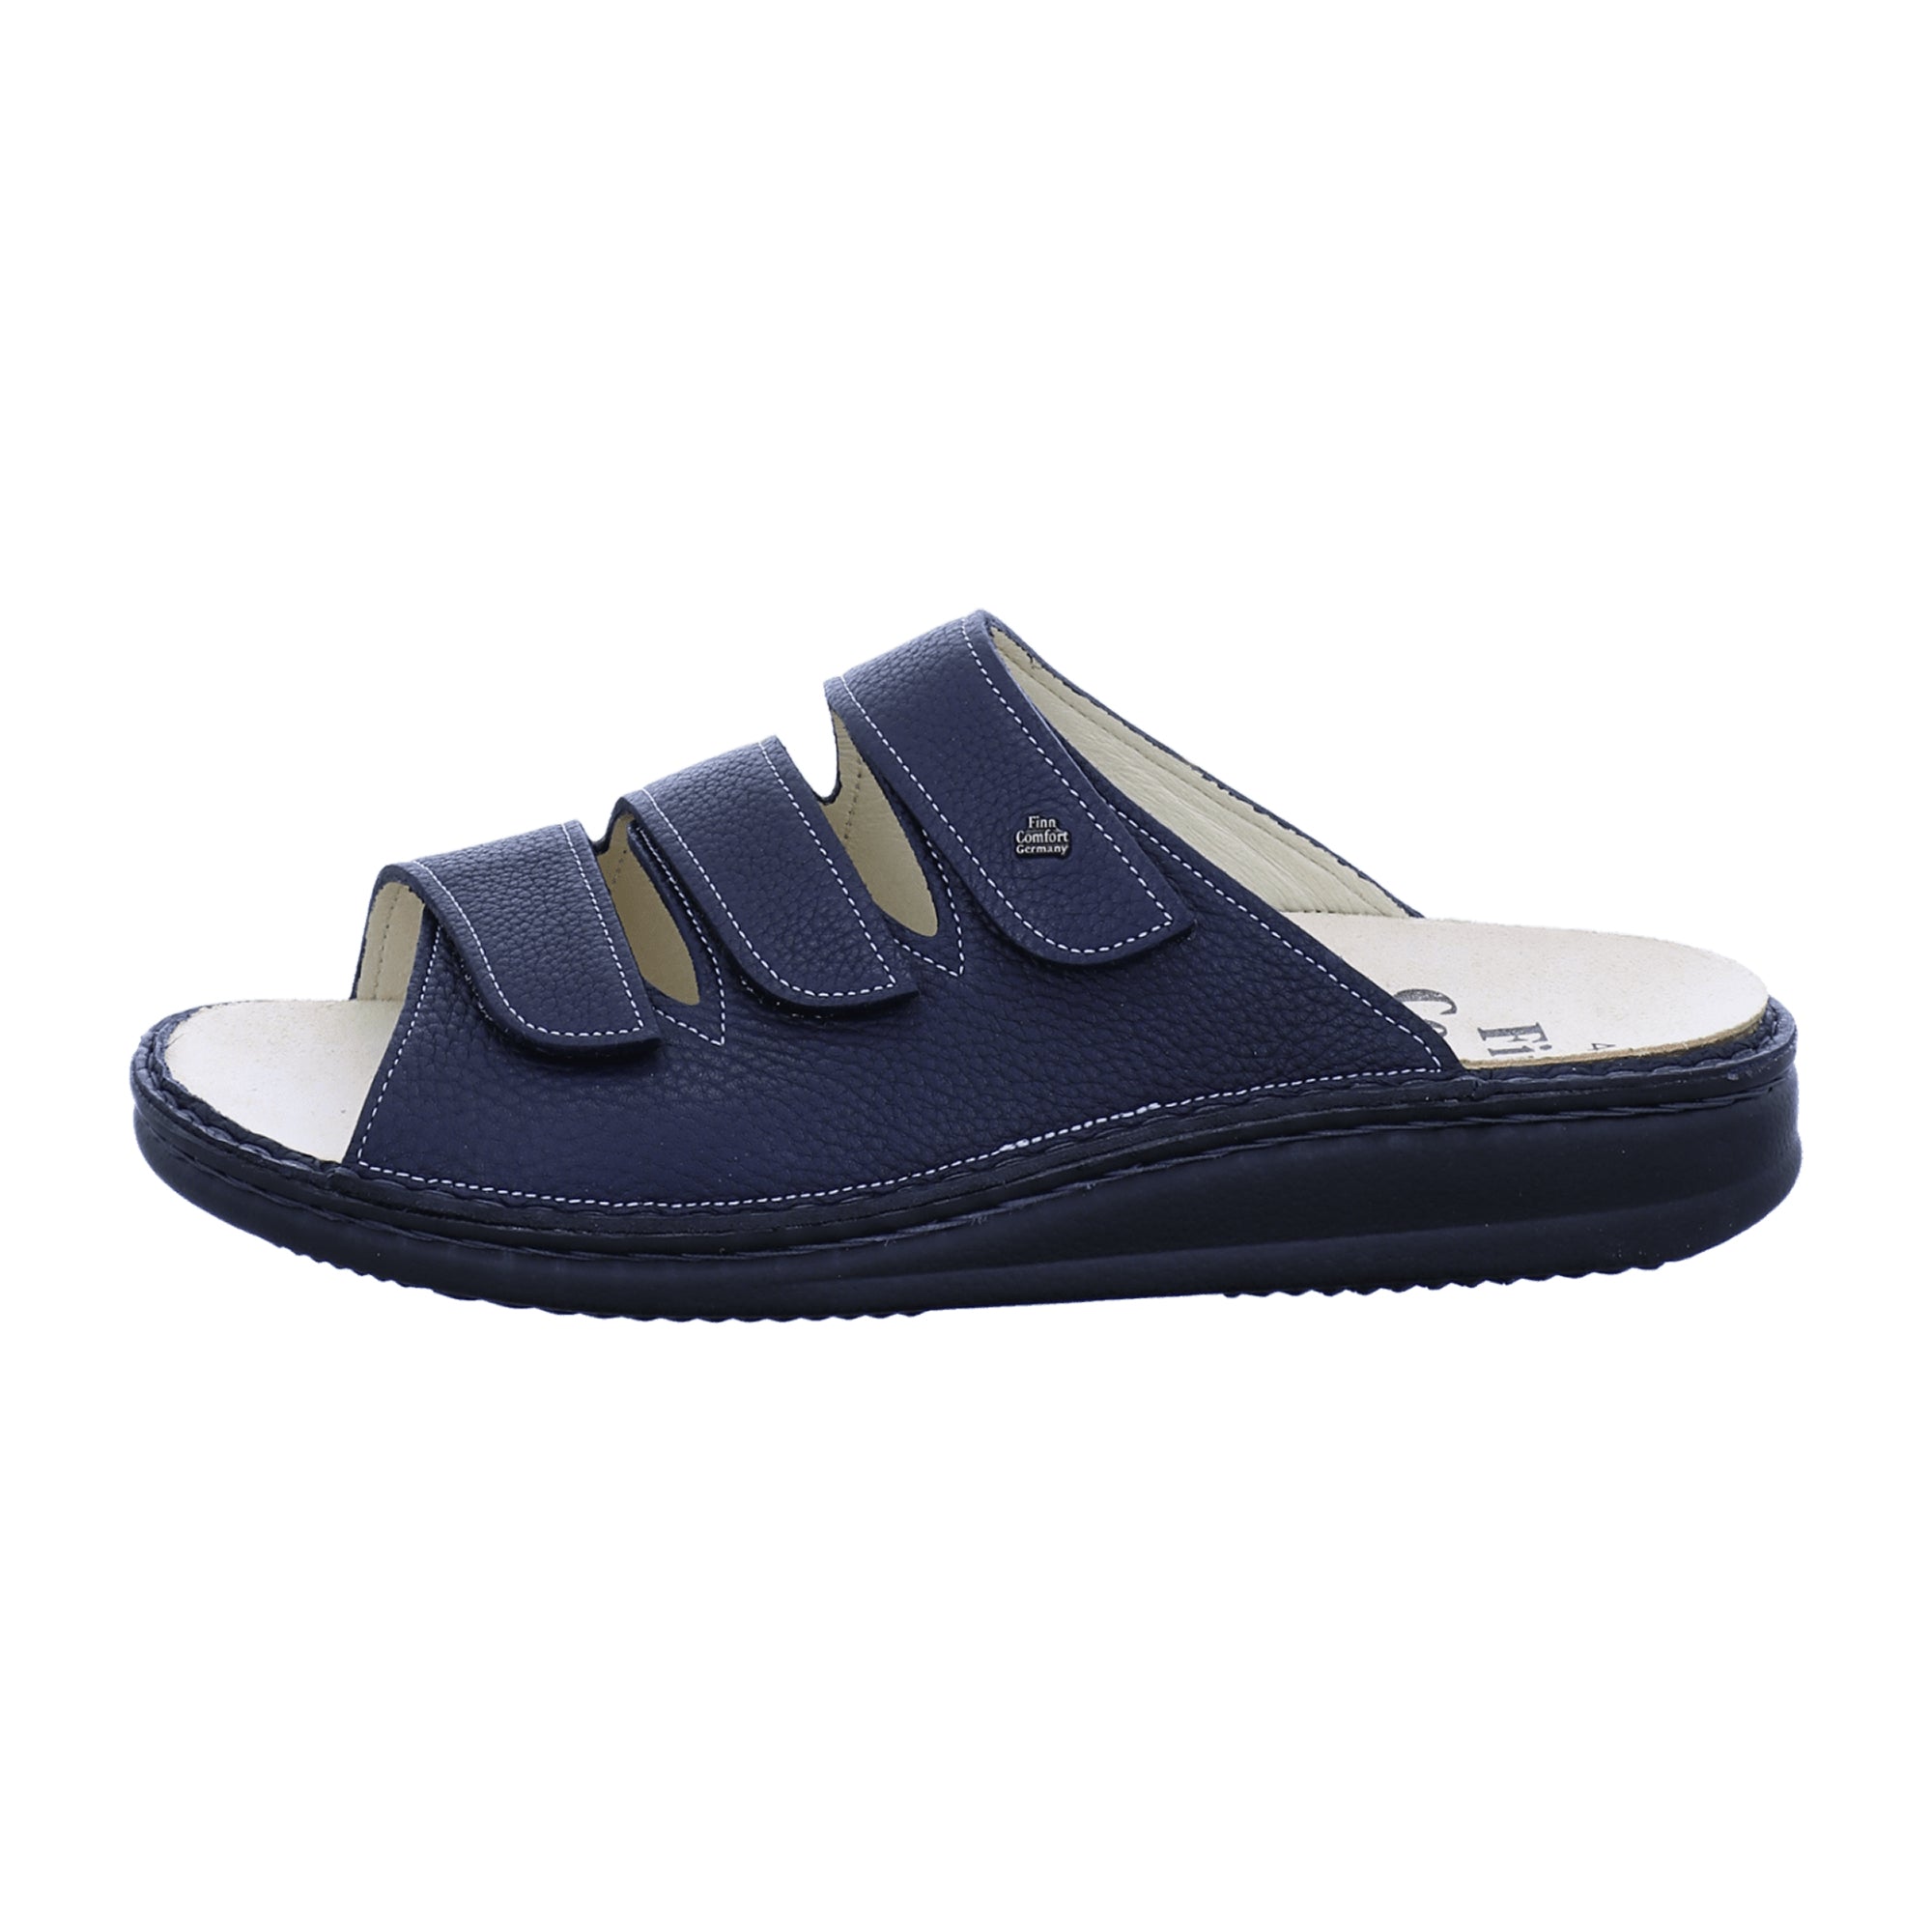 Finn Comfort Korfu Men's Sandals - Stylish & Durable in Blue